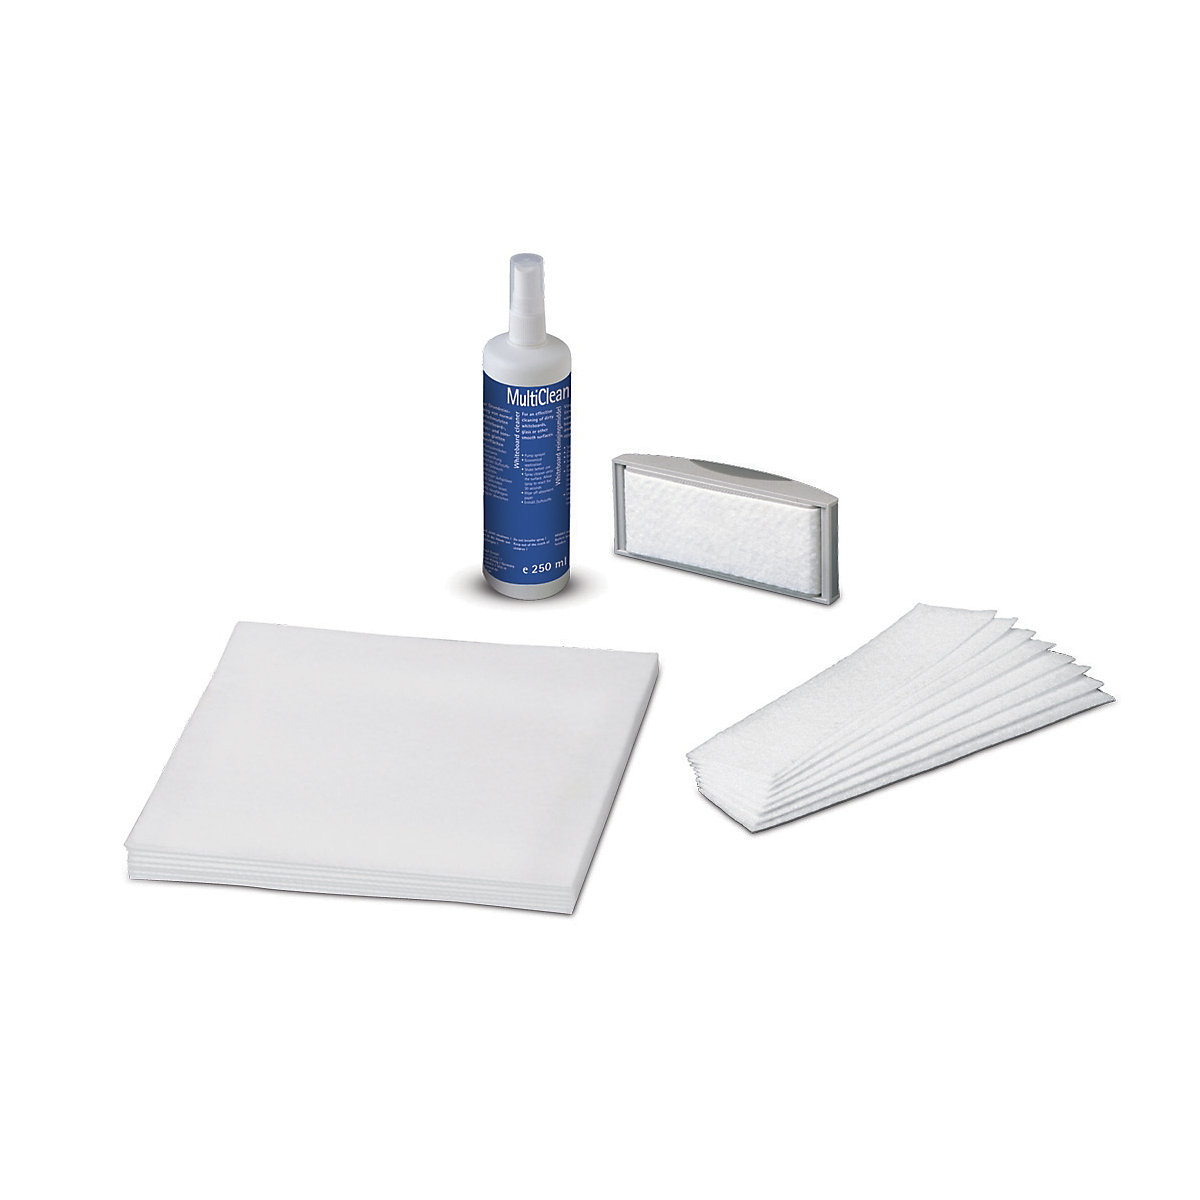 Whiteboard cleaner set – MAUL